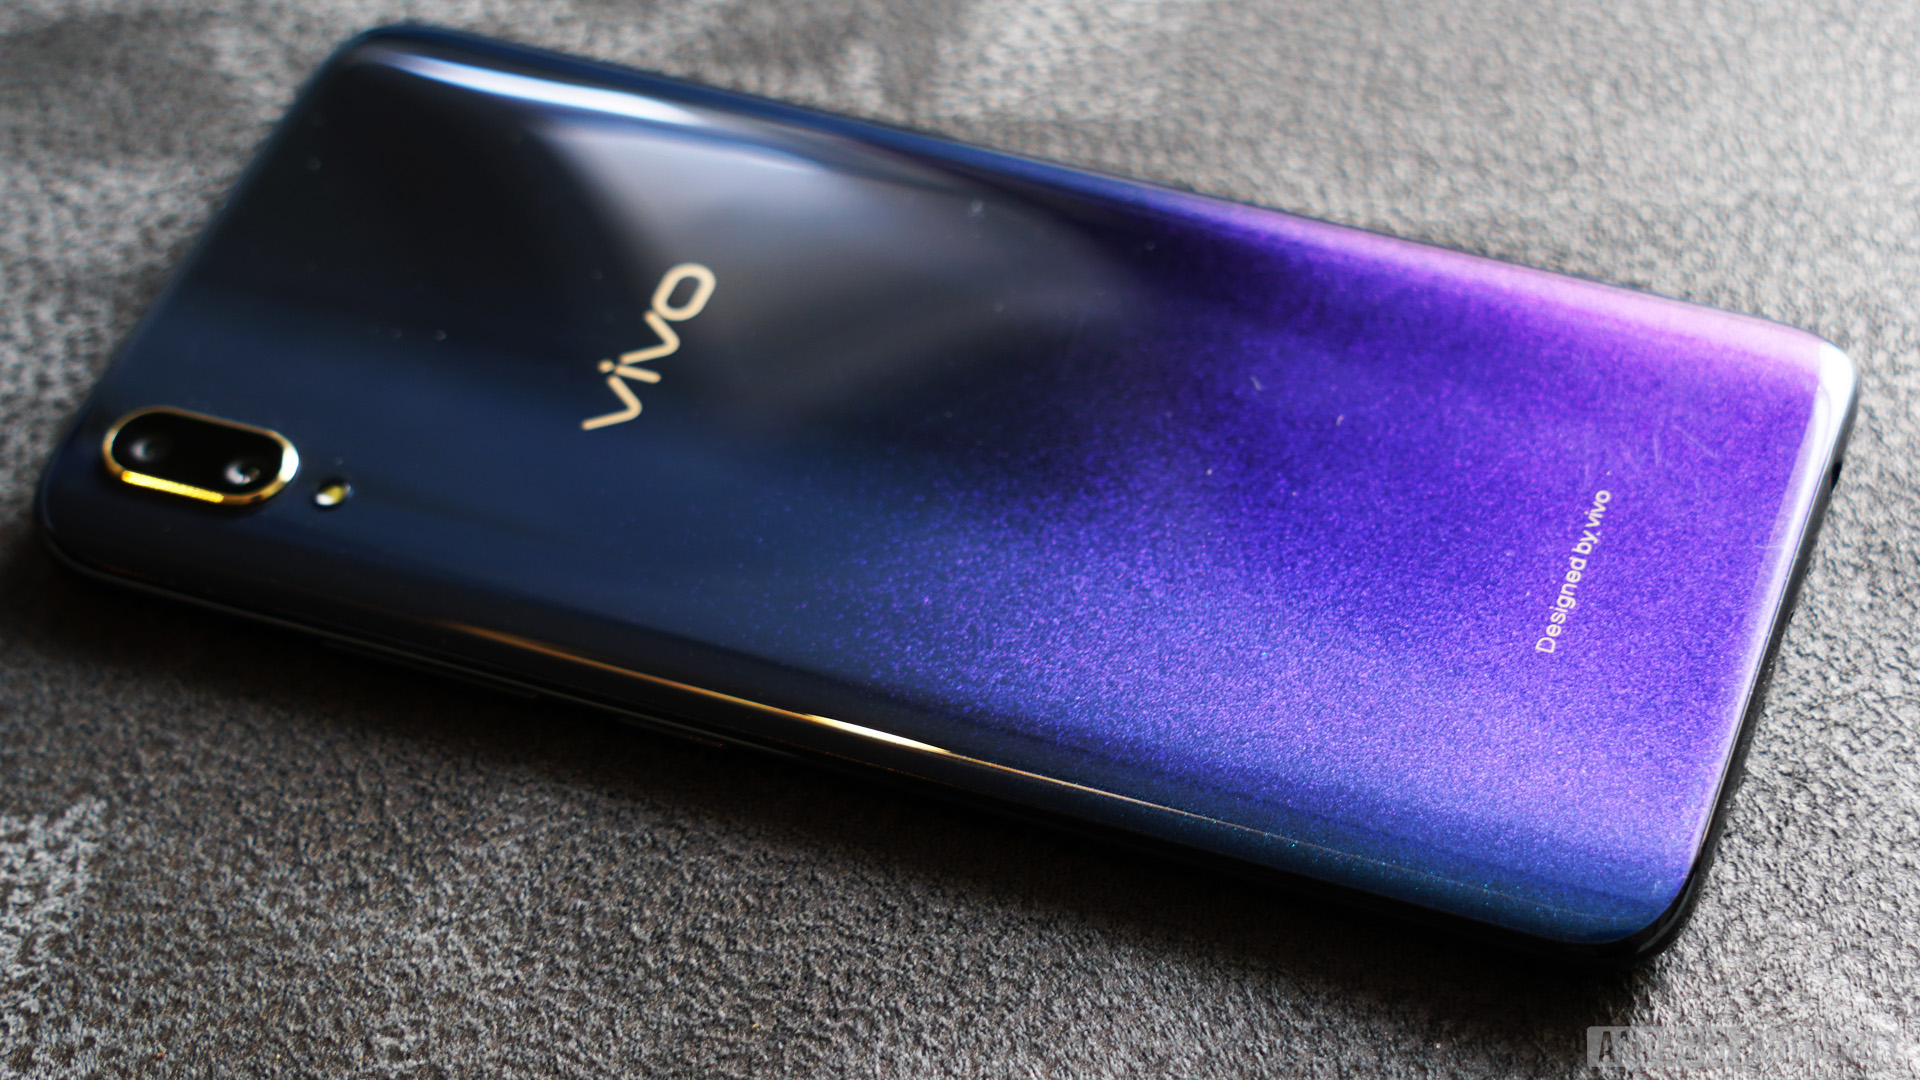 Vivo V11 review - starry night gradient back plate